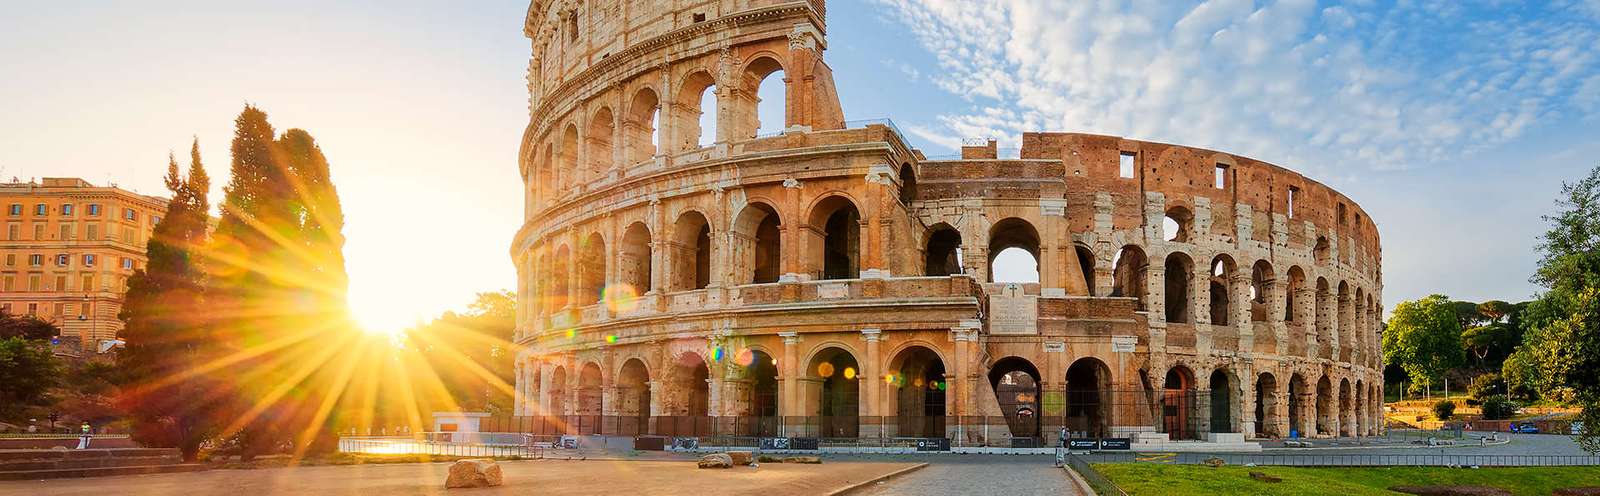 The Colosseum online puzzle